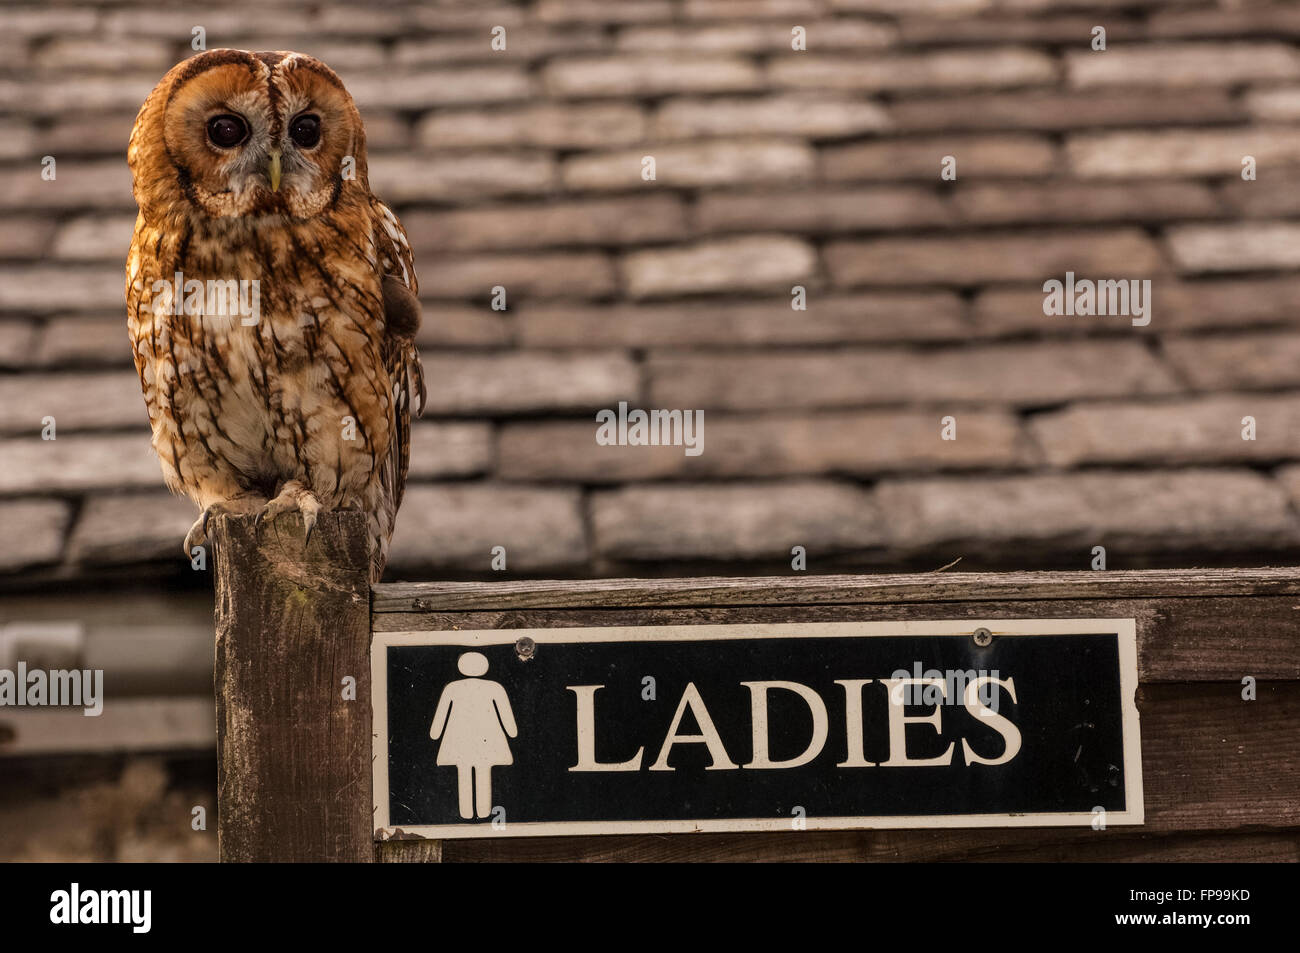 Tawny Owl toilet attendant Stock Photo